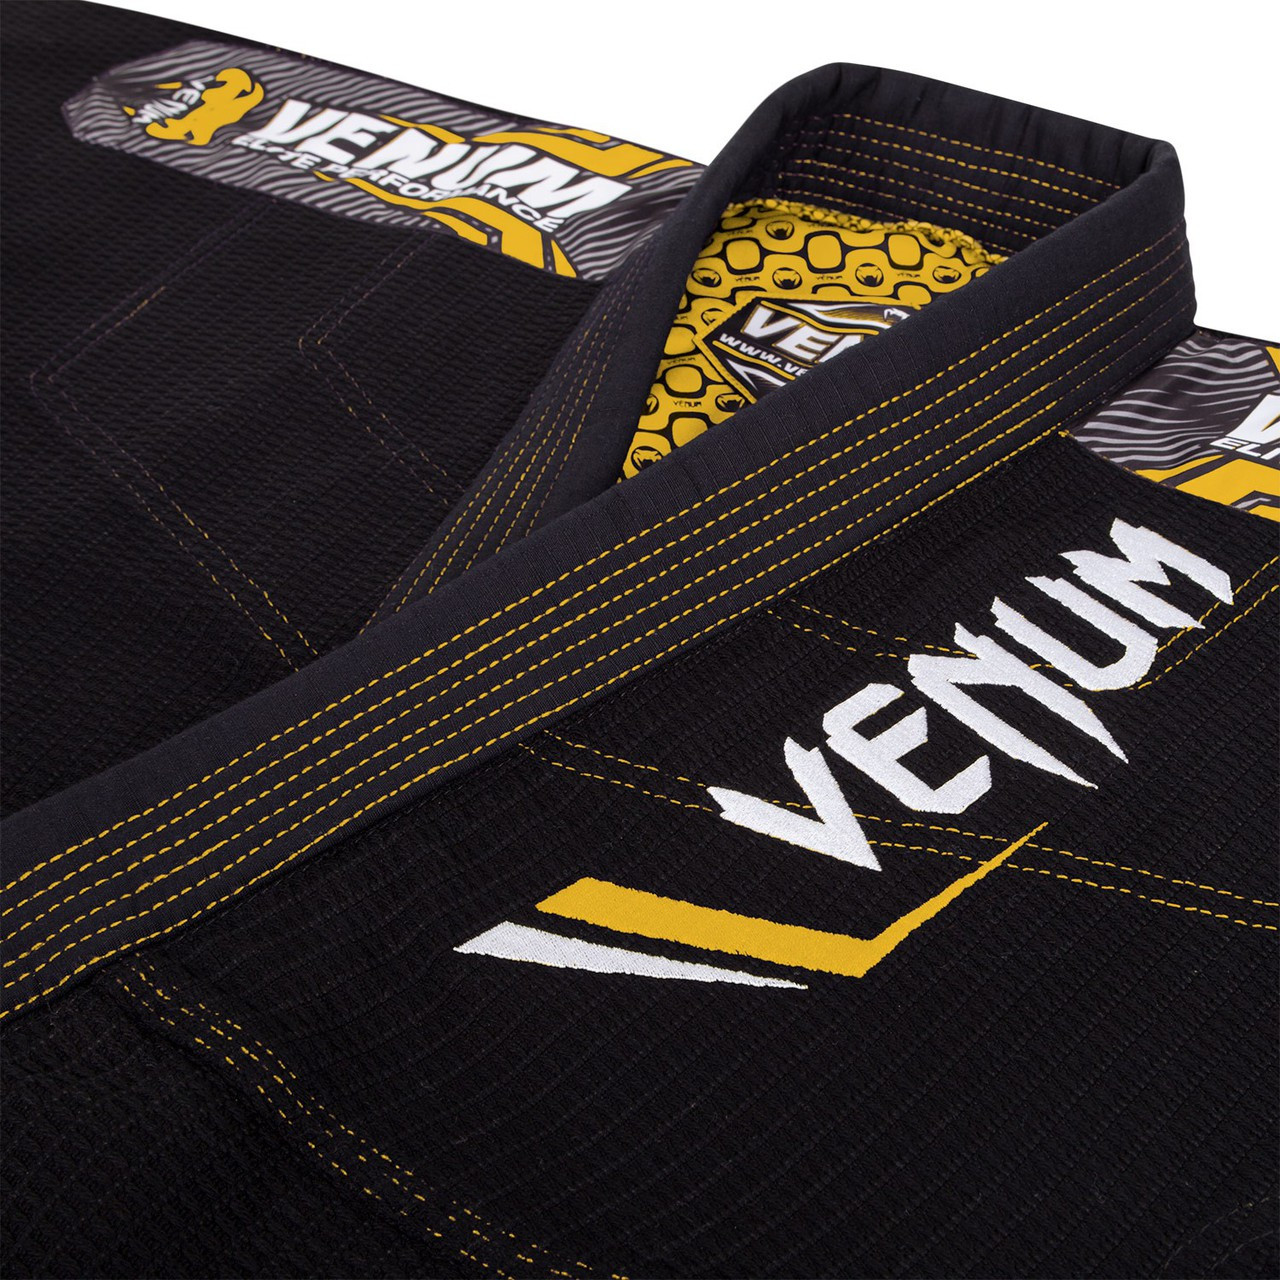 Venum Elite Gi Black and yellow lapel embroidery now available at www.thejiujitsushop.com

Enjoy free shipping from The Jiu Jitsu Shop